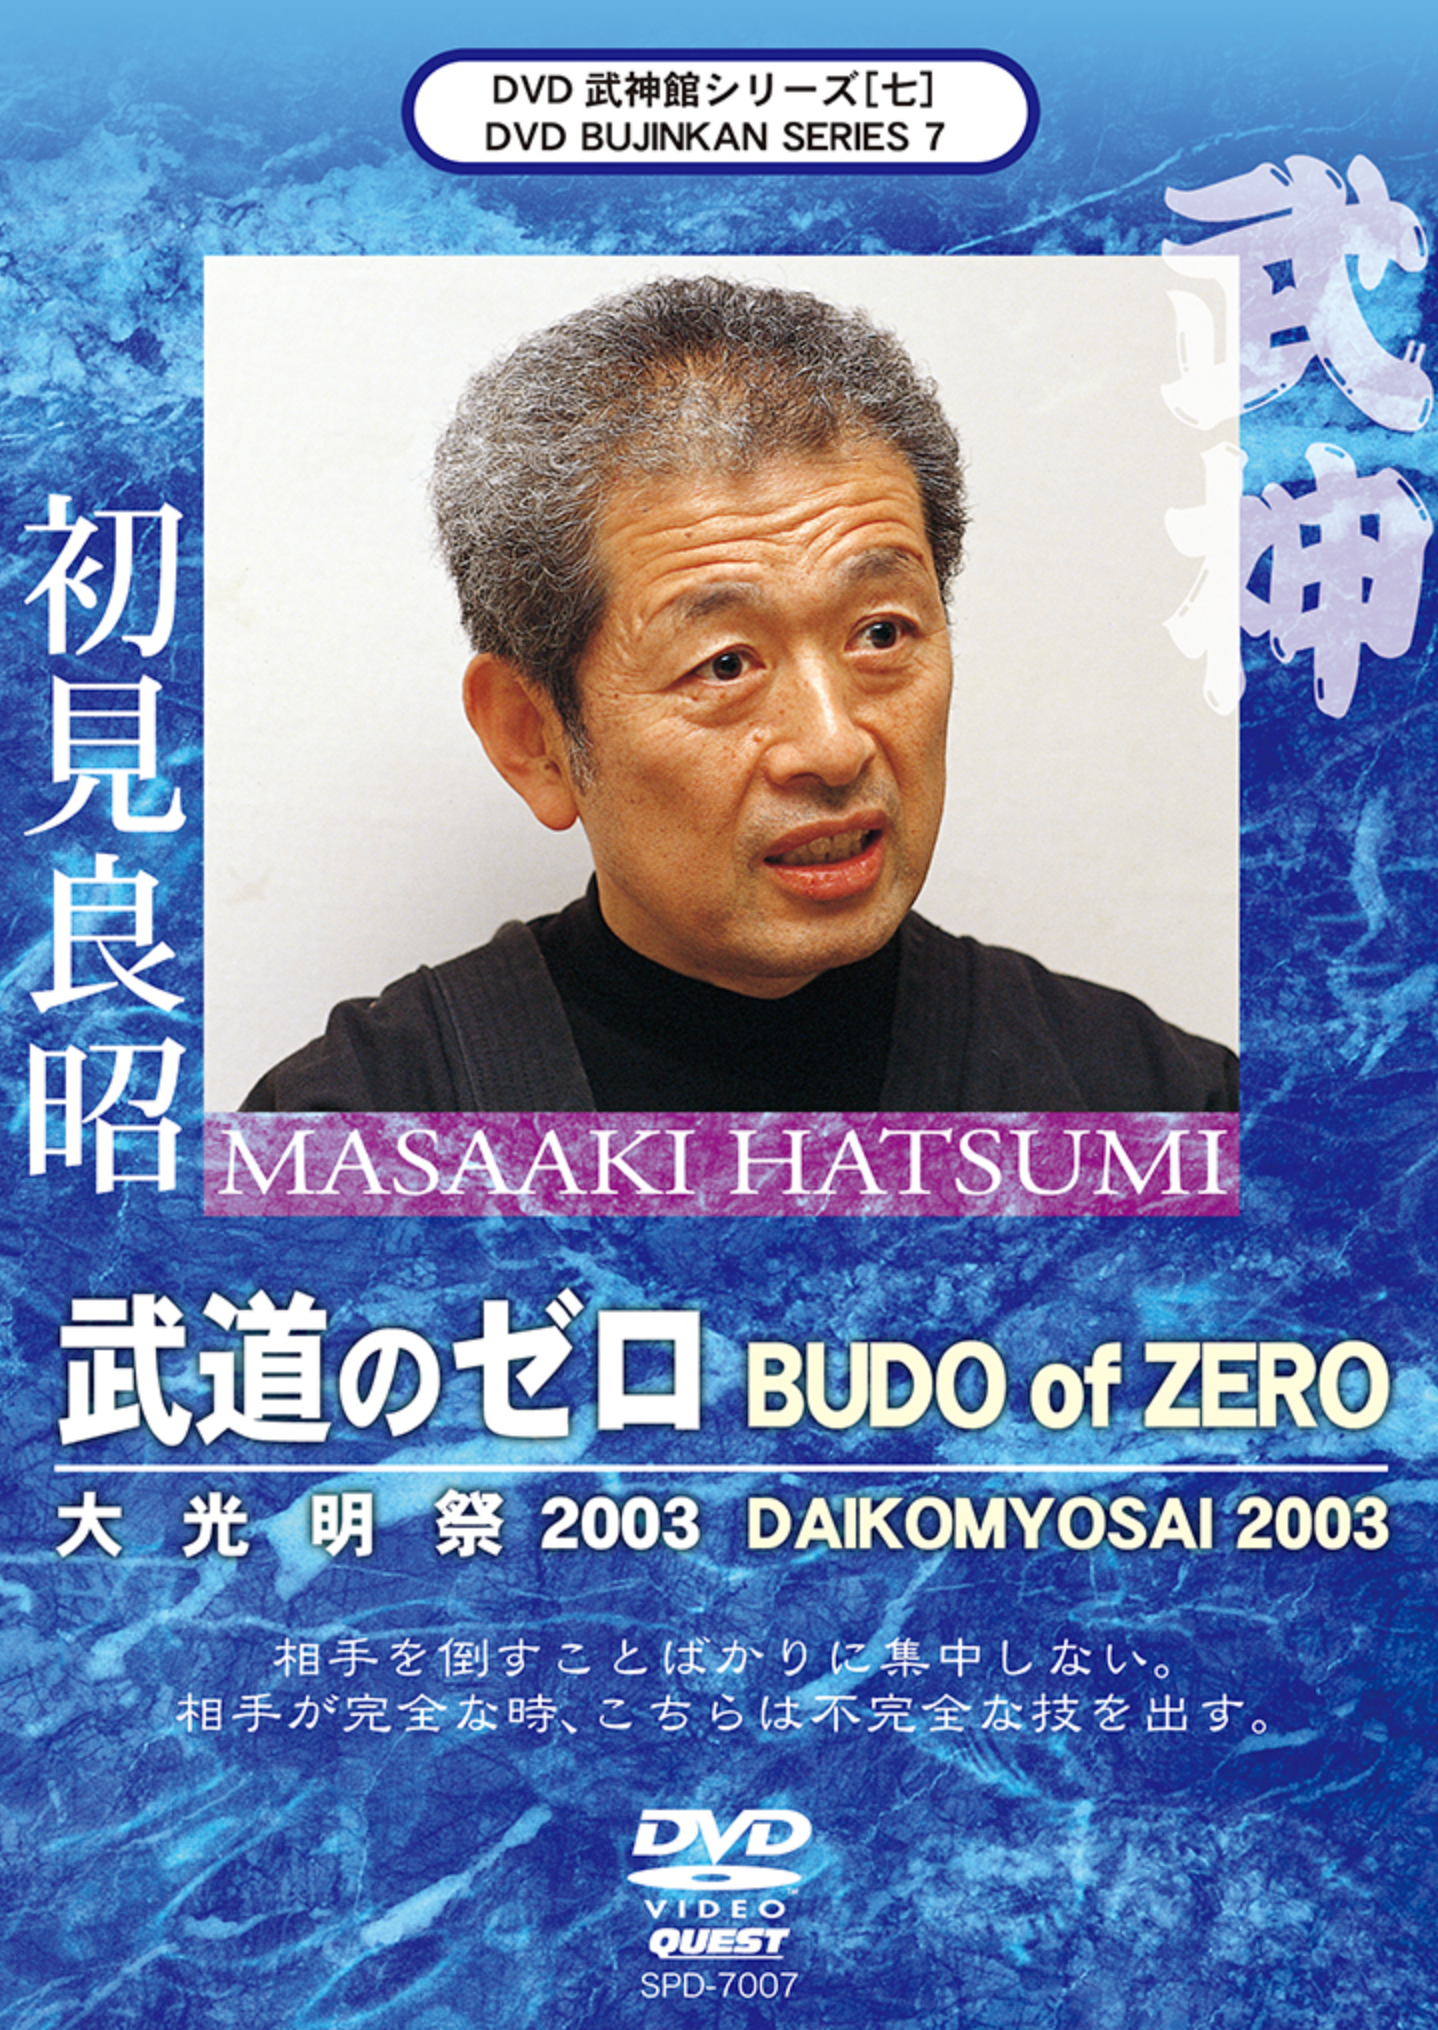 Bujinkan DVD Series 7: Budo no Zero with Masaaki Hatsumi - Budovideos Inc